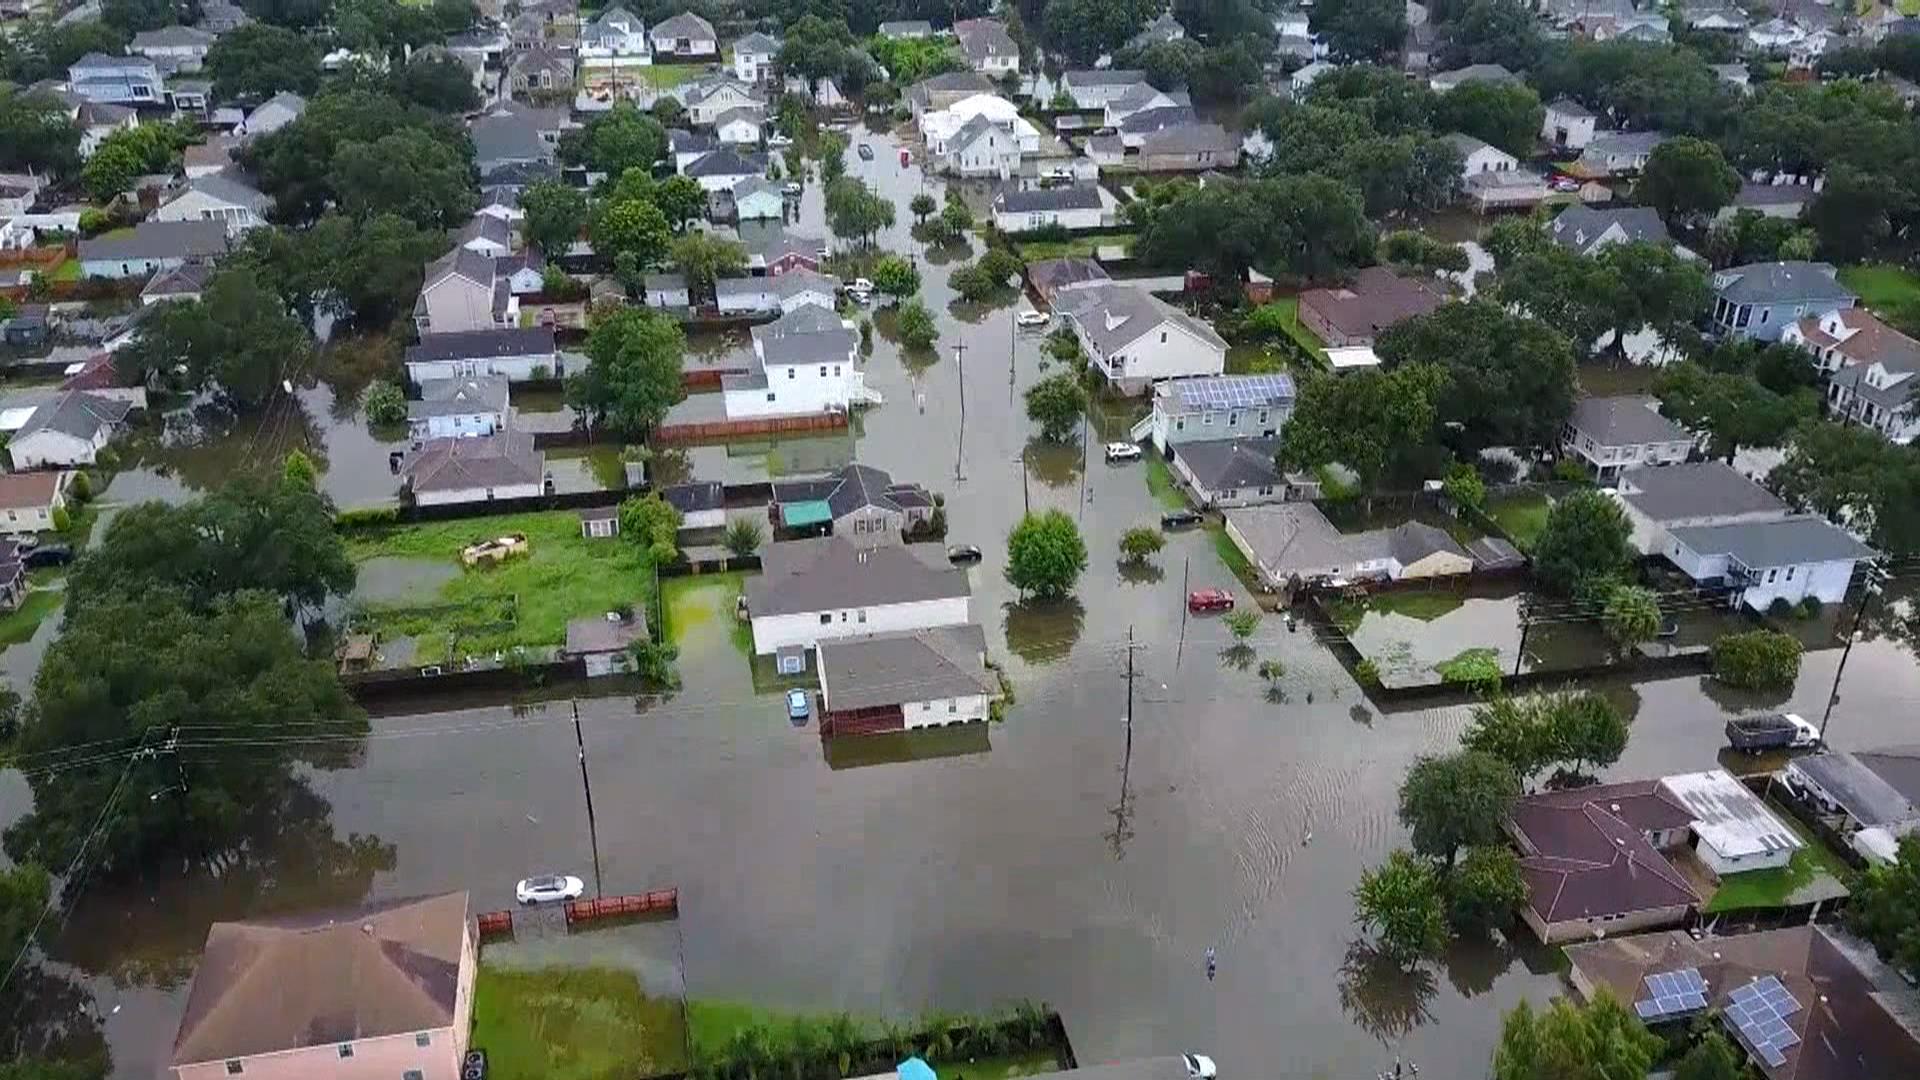 alerta de inundacoes awui em new orleans #brasileirosemneworleans